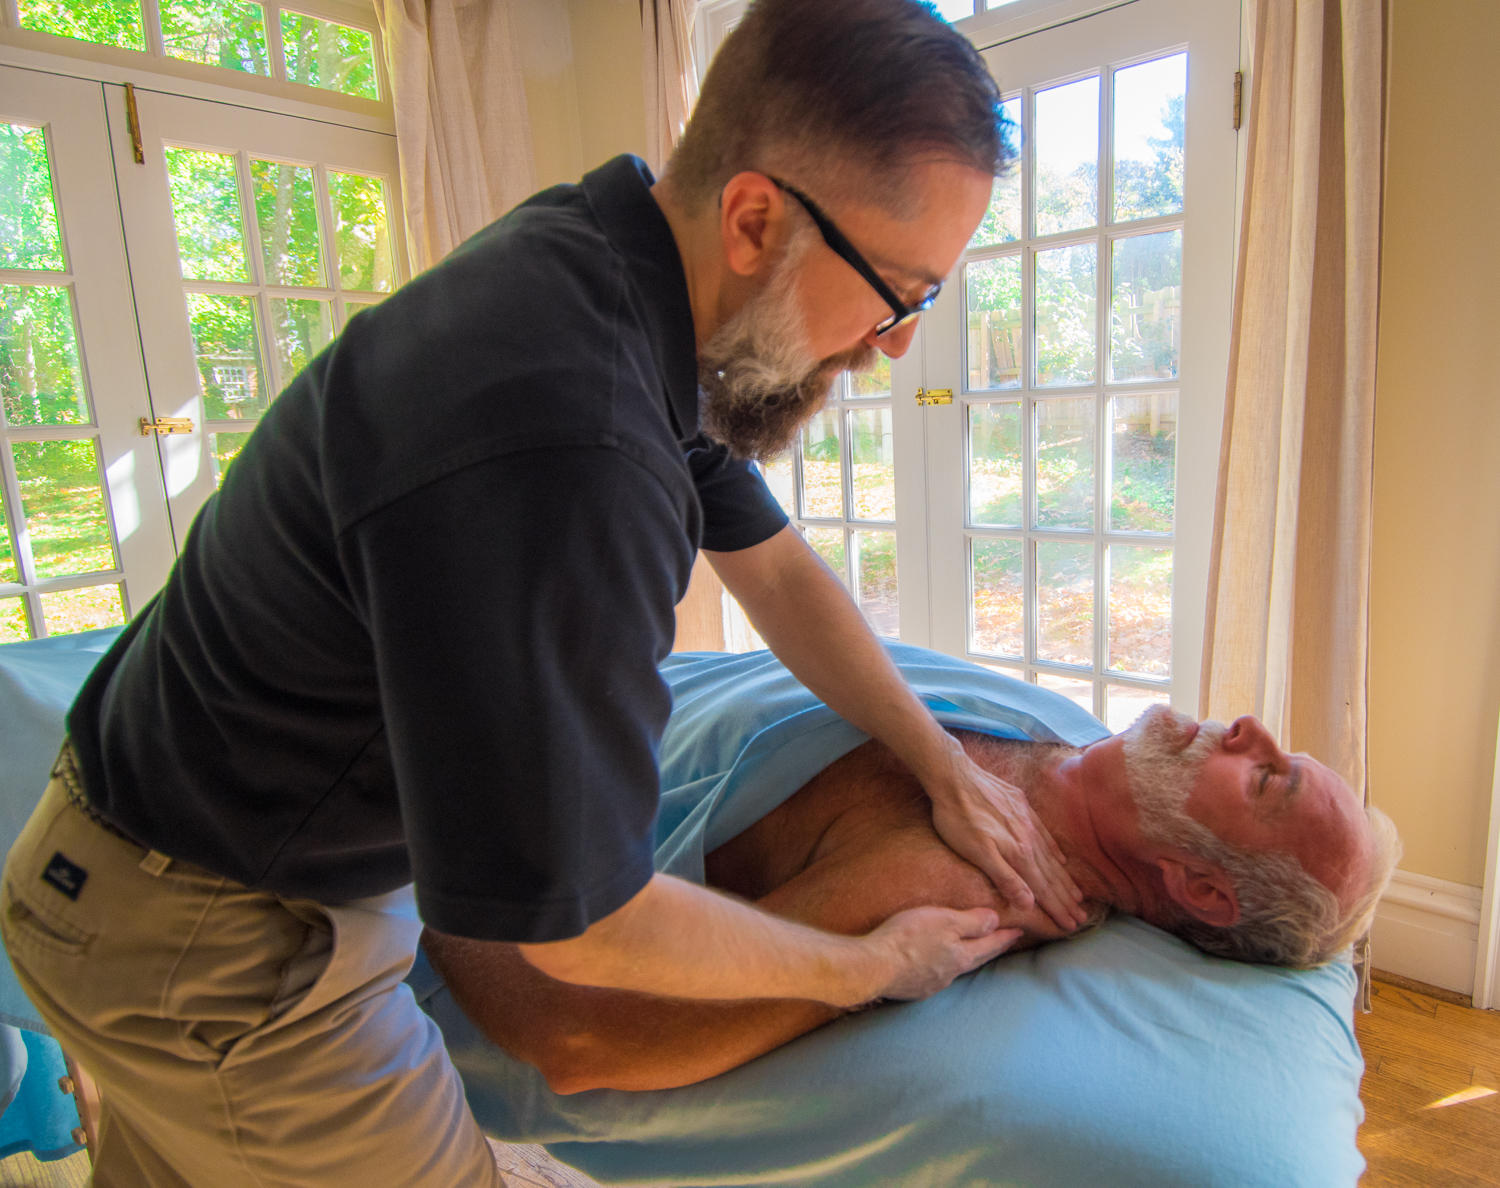 ON-SIte Massage - Centered Presence, LTD